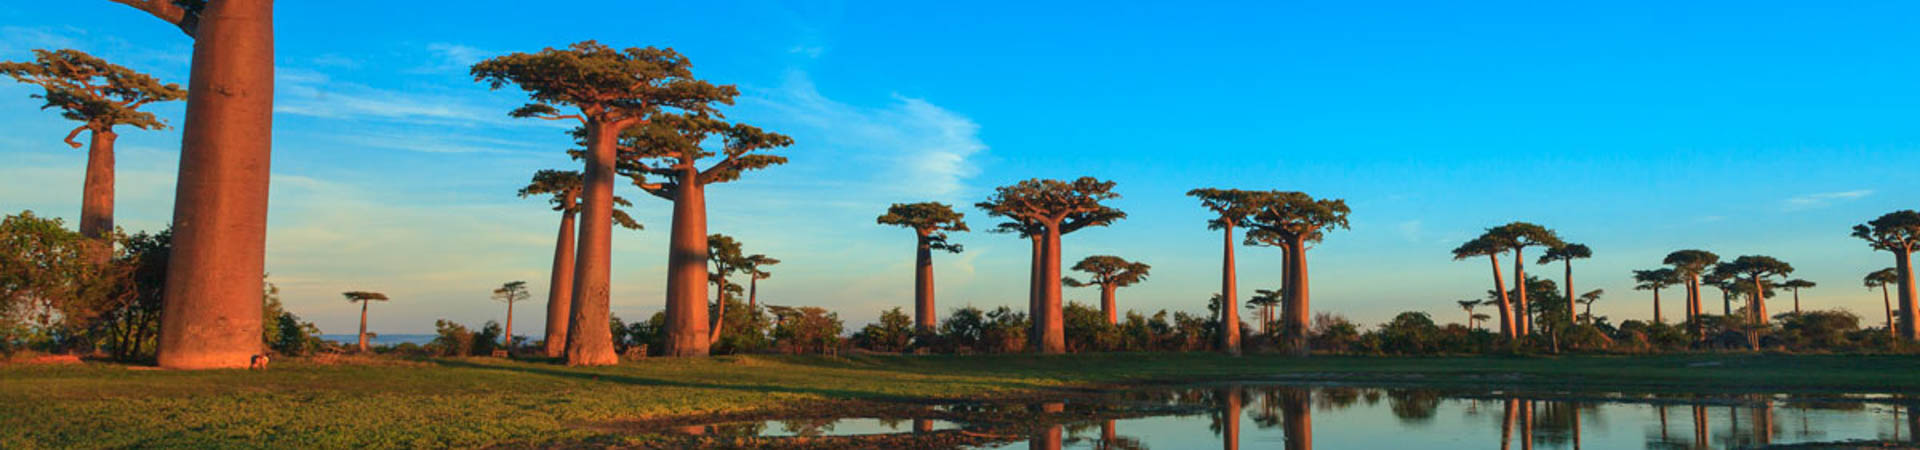 Baobab Trees - Antsiranana, Madagascar